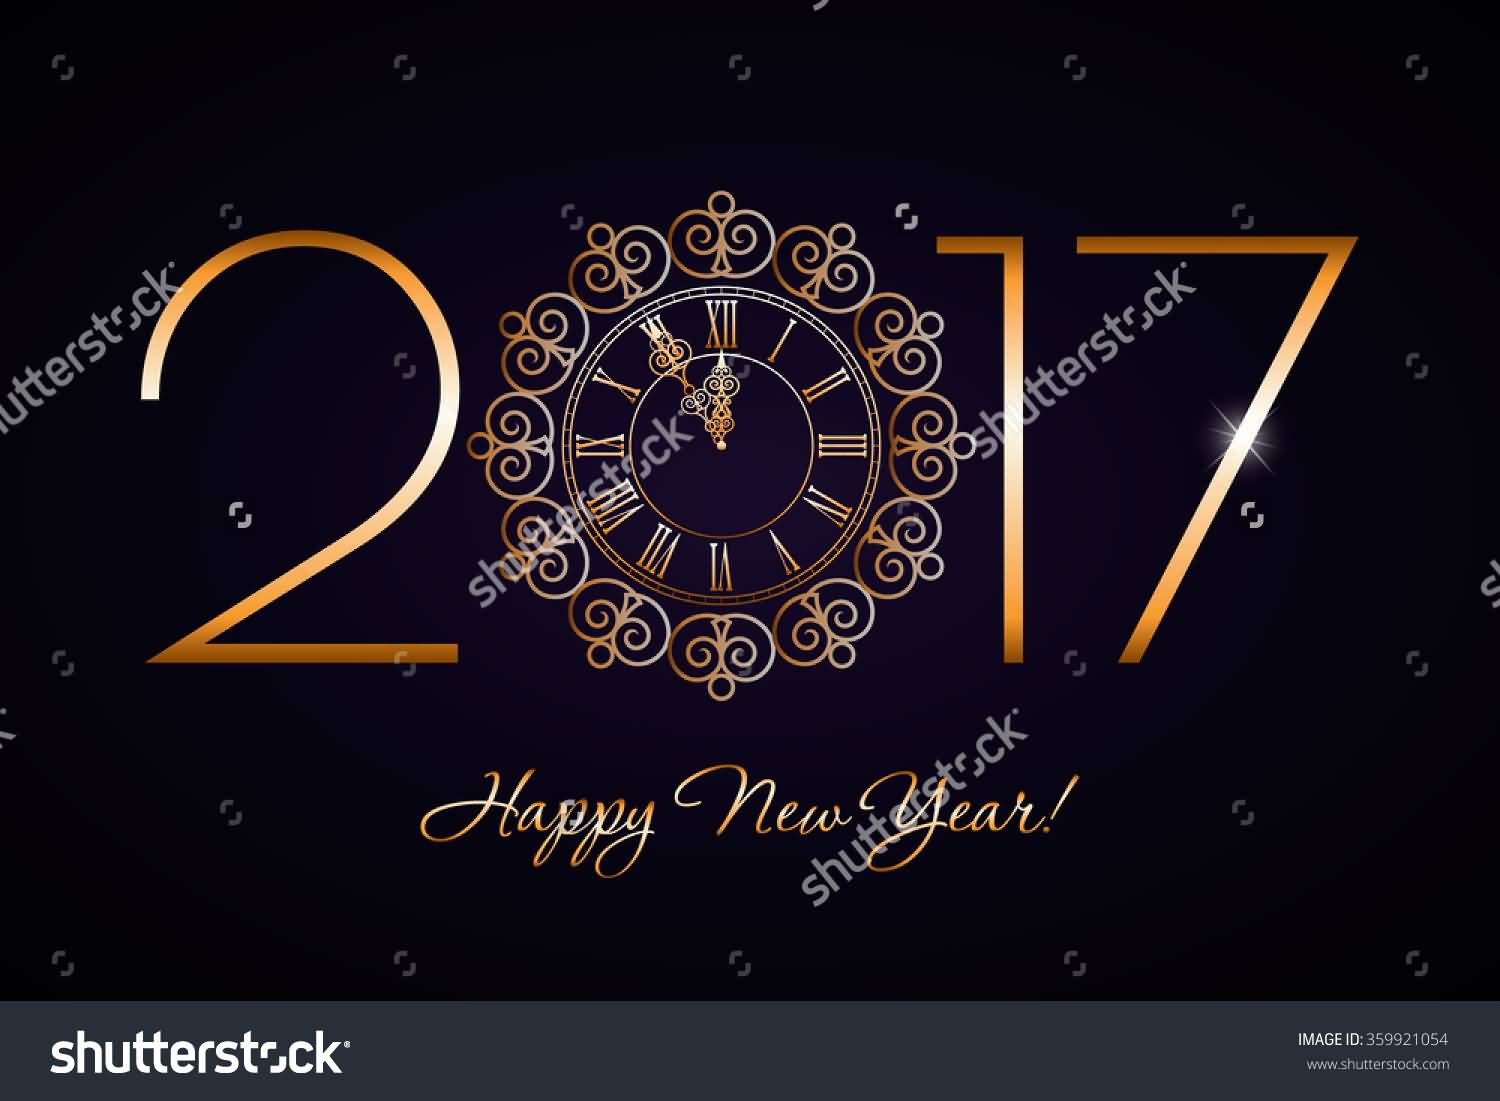 2017 Happy New Year Wall Clock Illustration